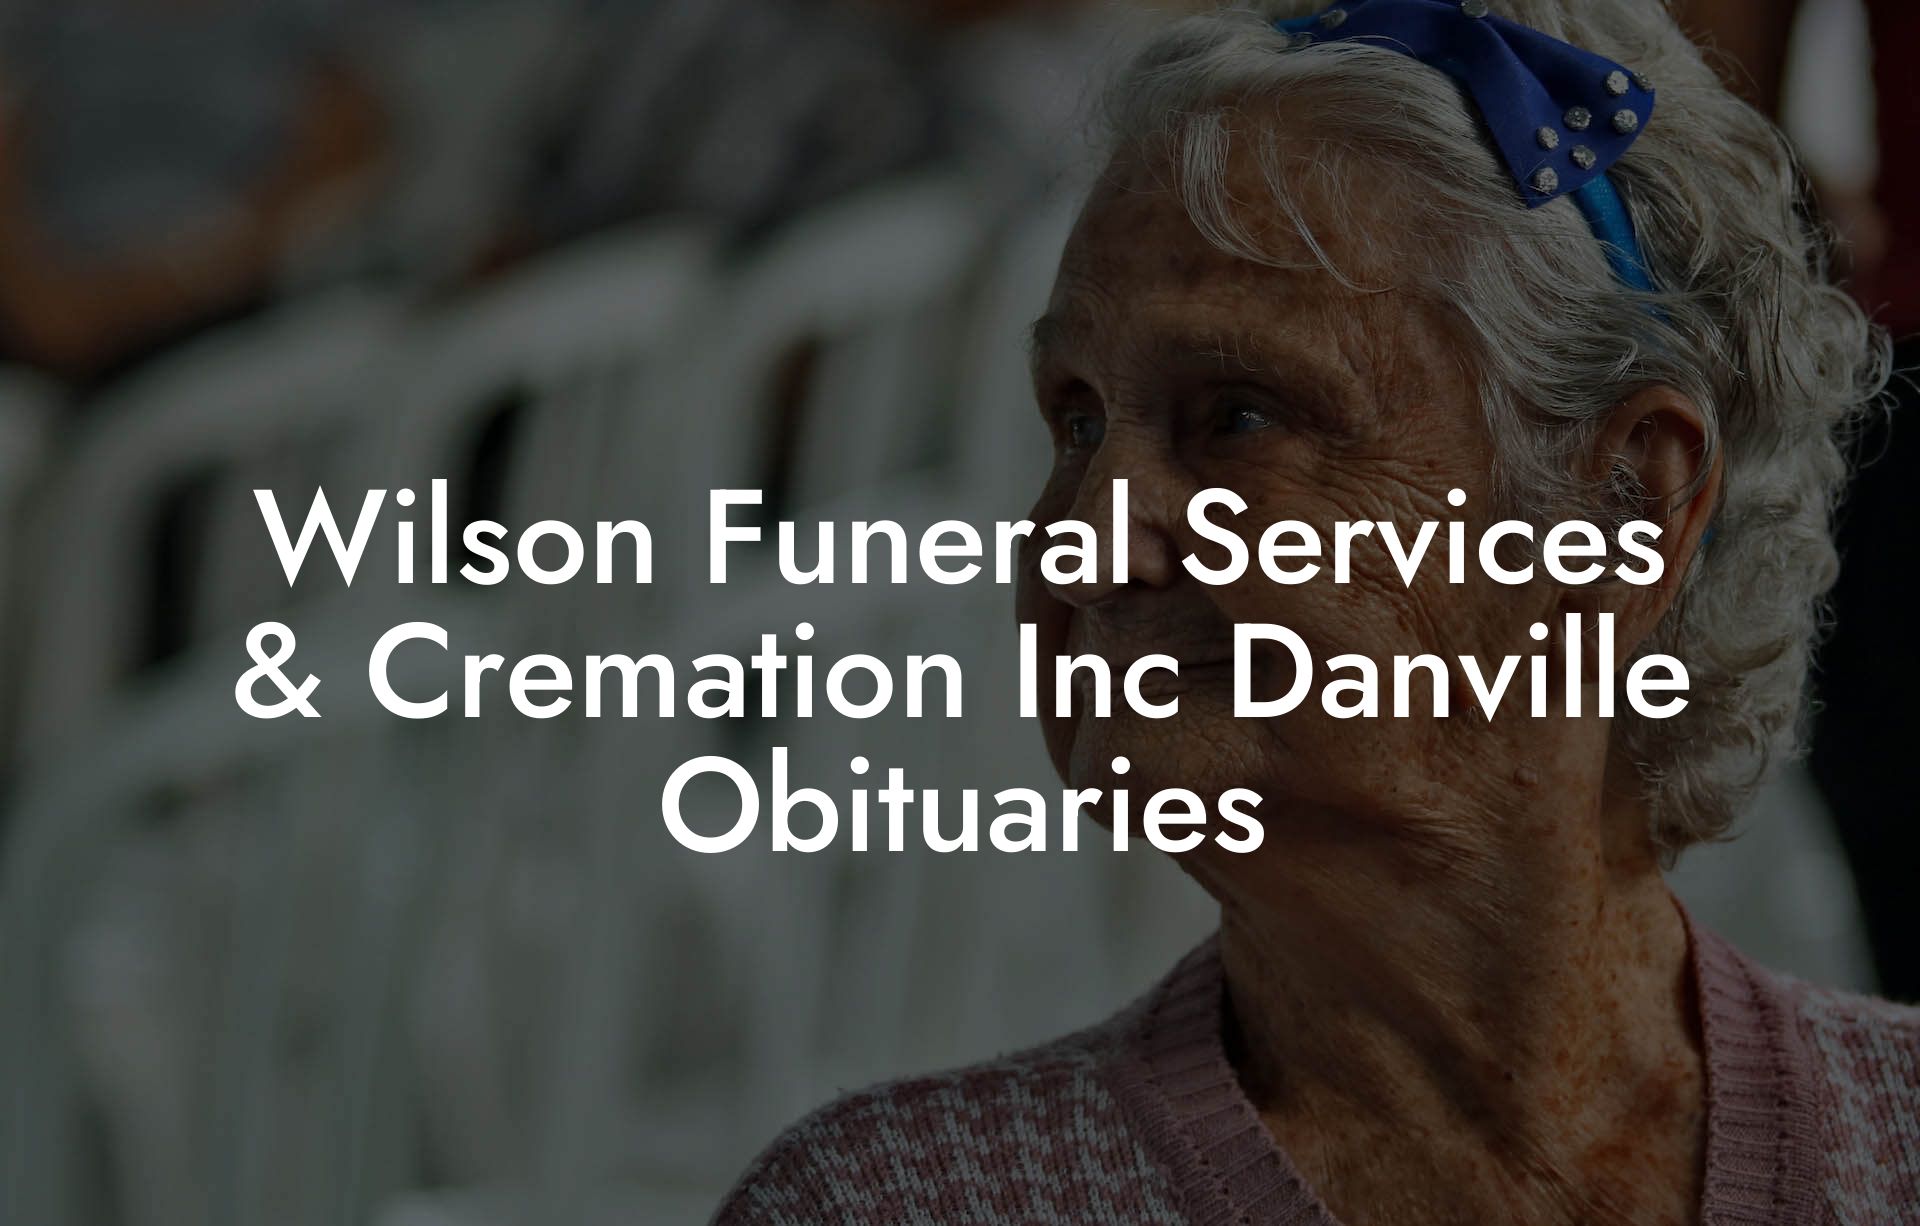 Wilson Funeral Services & Cremation Inc Danville Obituaries - Eulogy ...